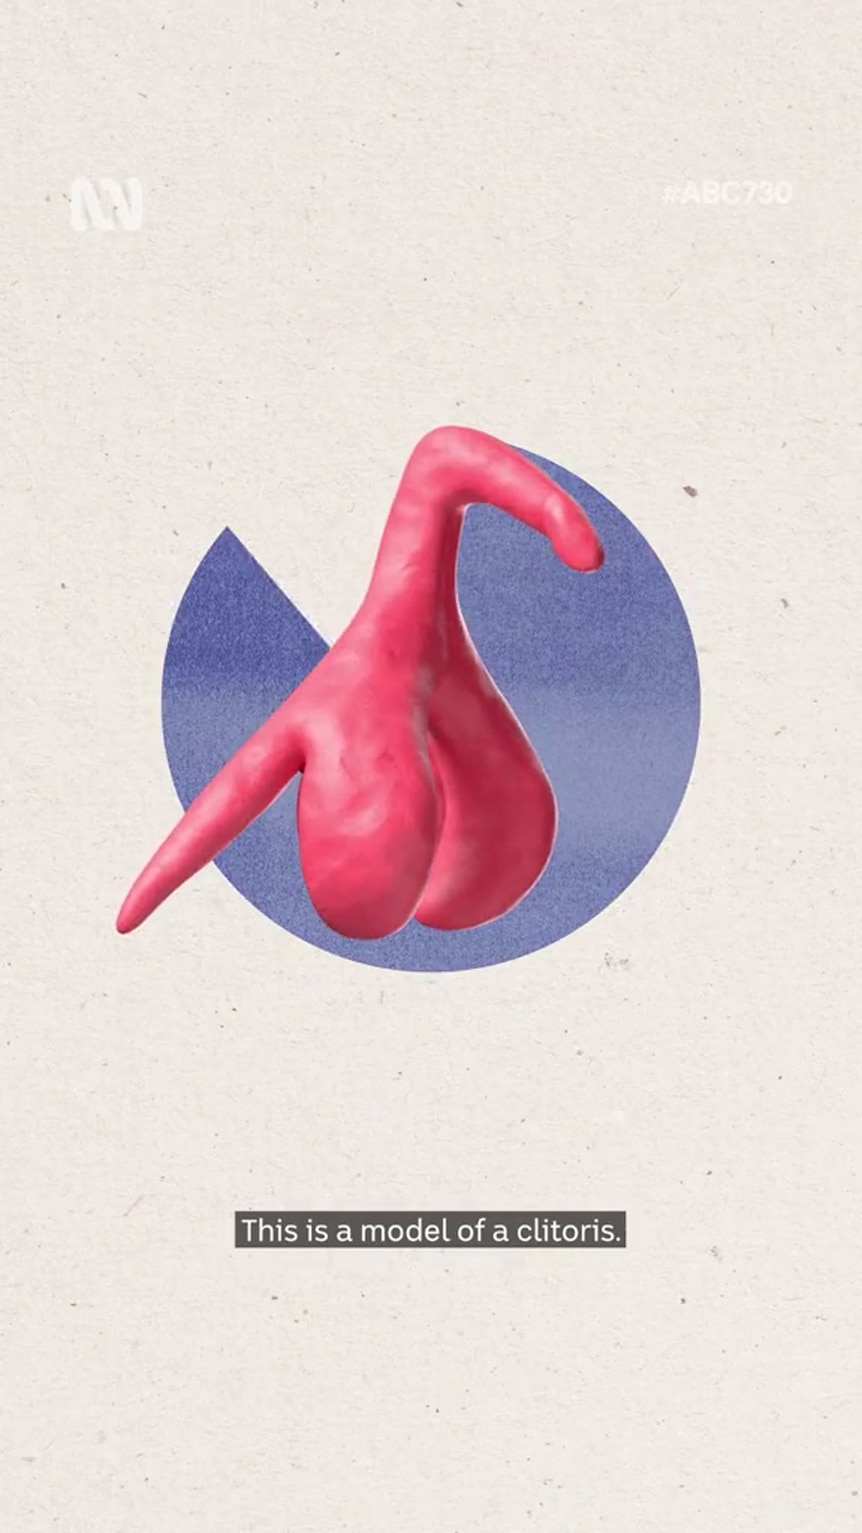 An anatomical illustration of a clitoris  